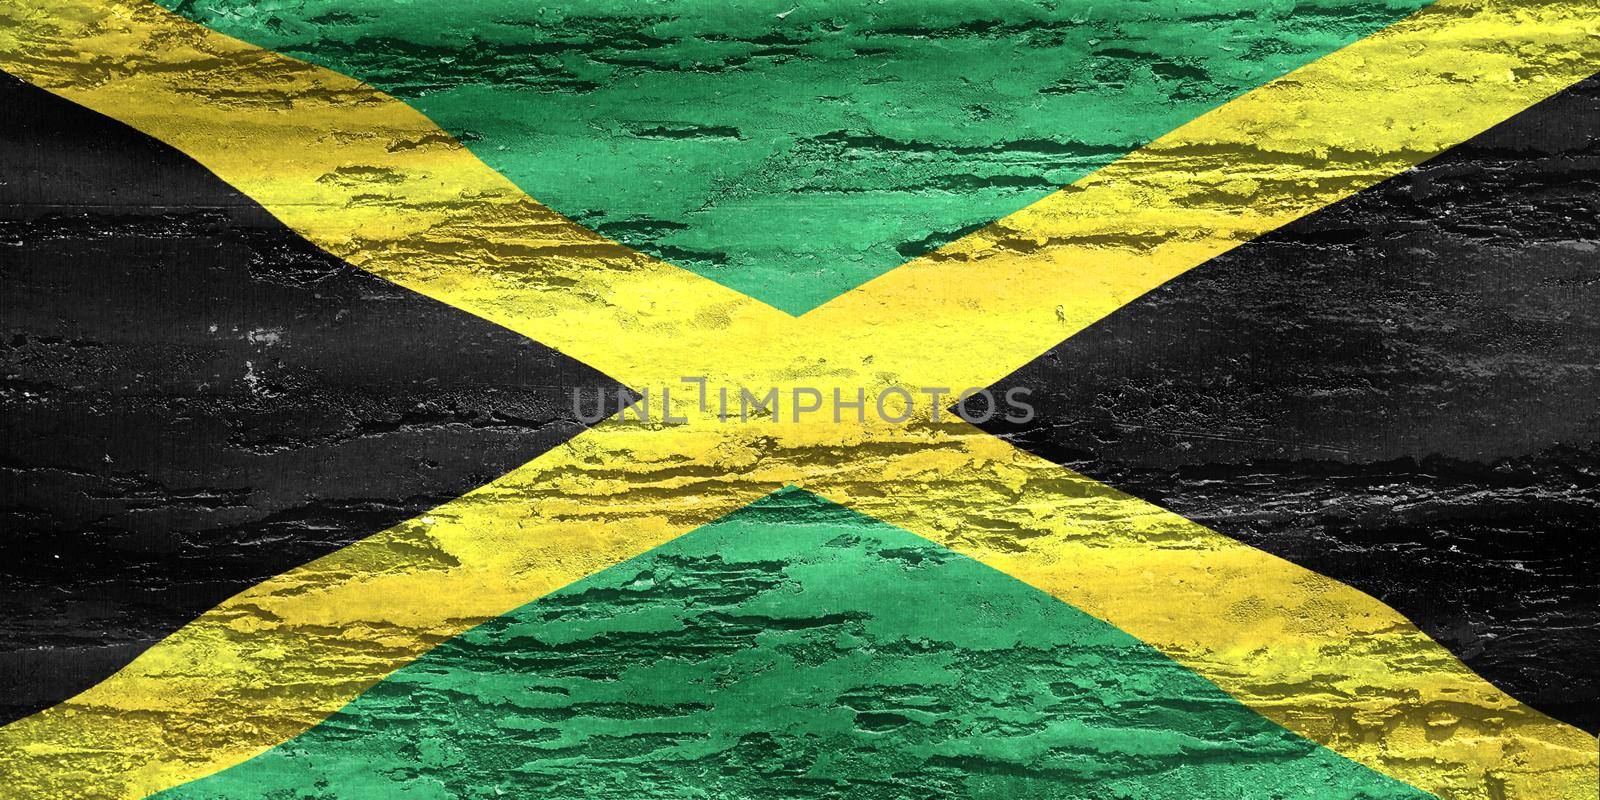 Jamaica flag - realistic waving fabric flag